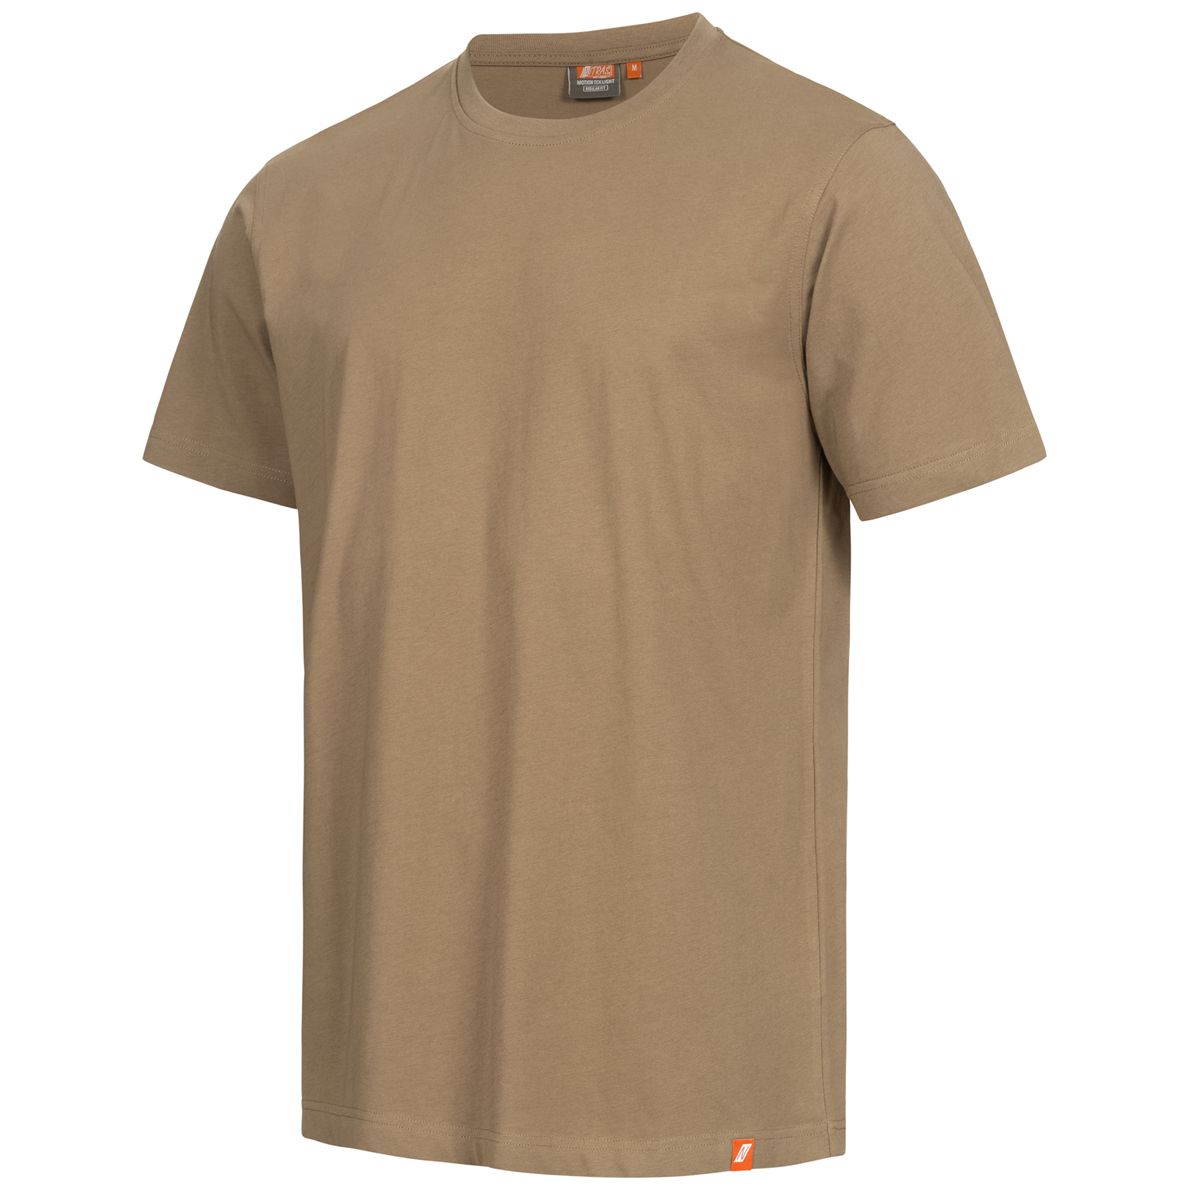 SALE: NITRAS MOTION TEX LIGHT work T-shirt - 100% cotton short sleeve shirt - for work - Beige - S